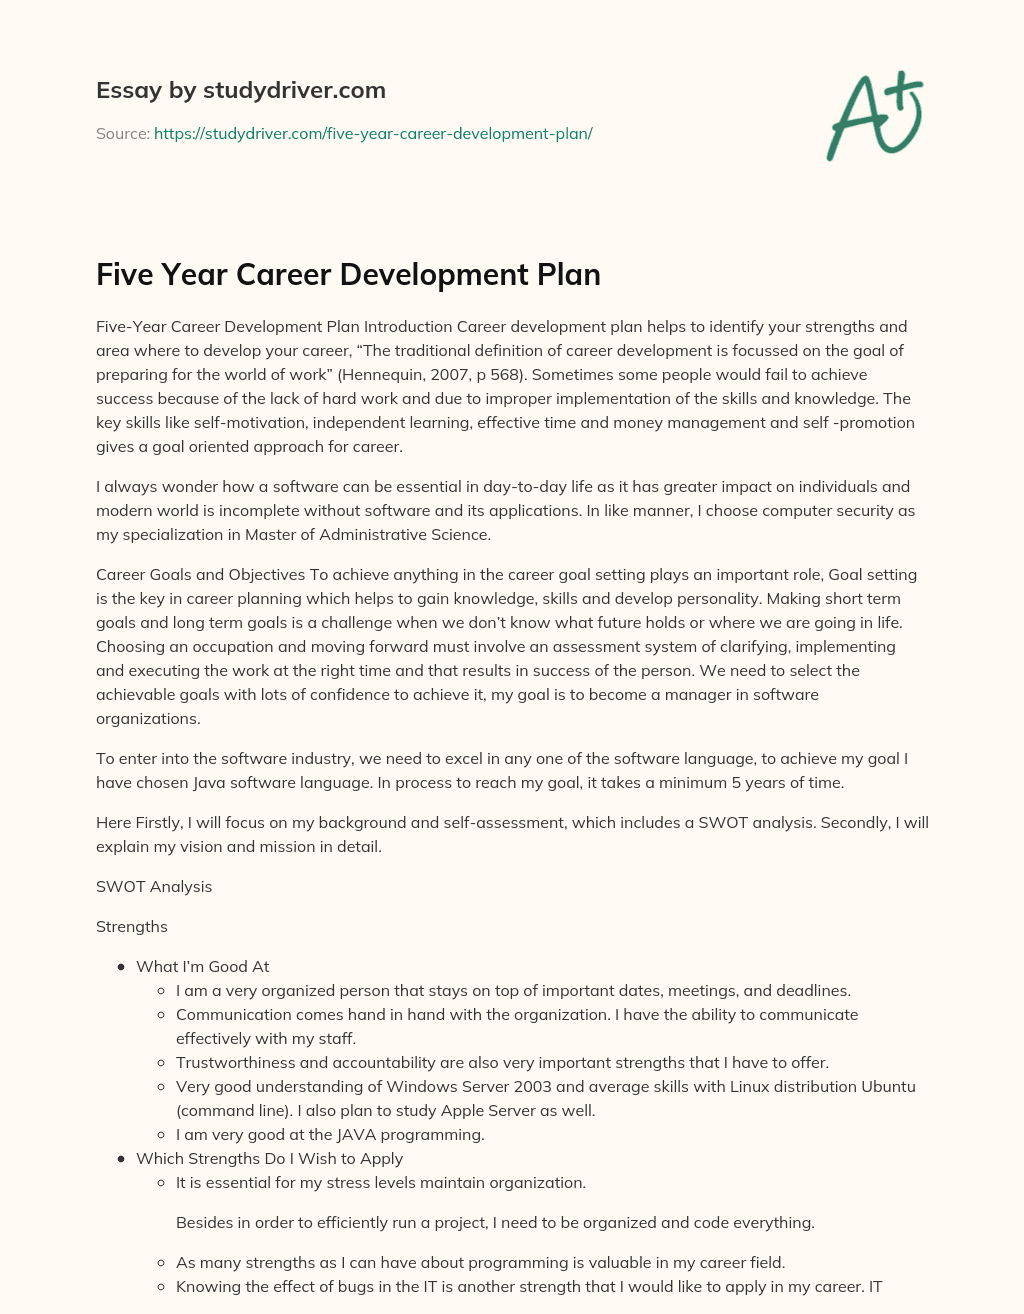 Five Year Career Development Plan essay